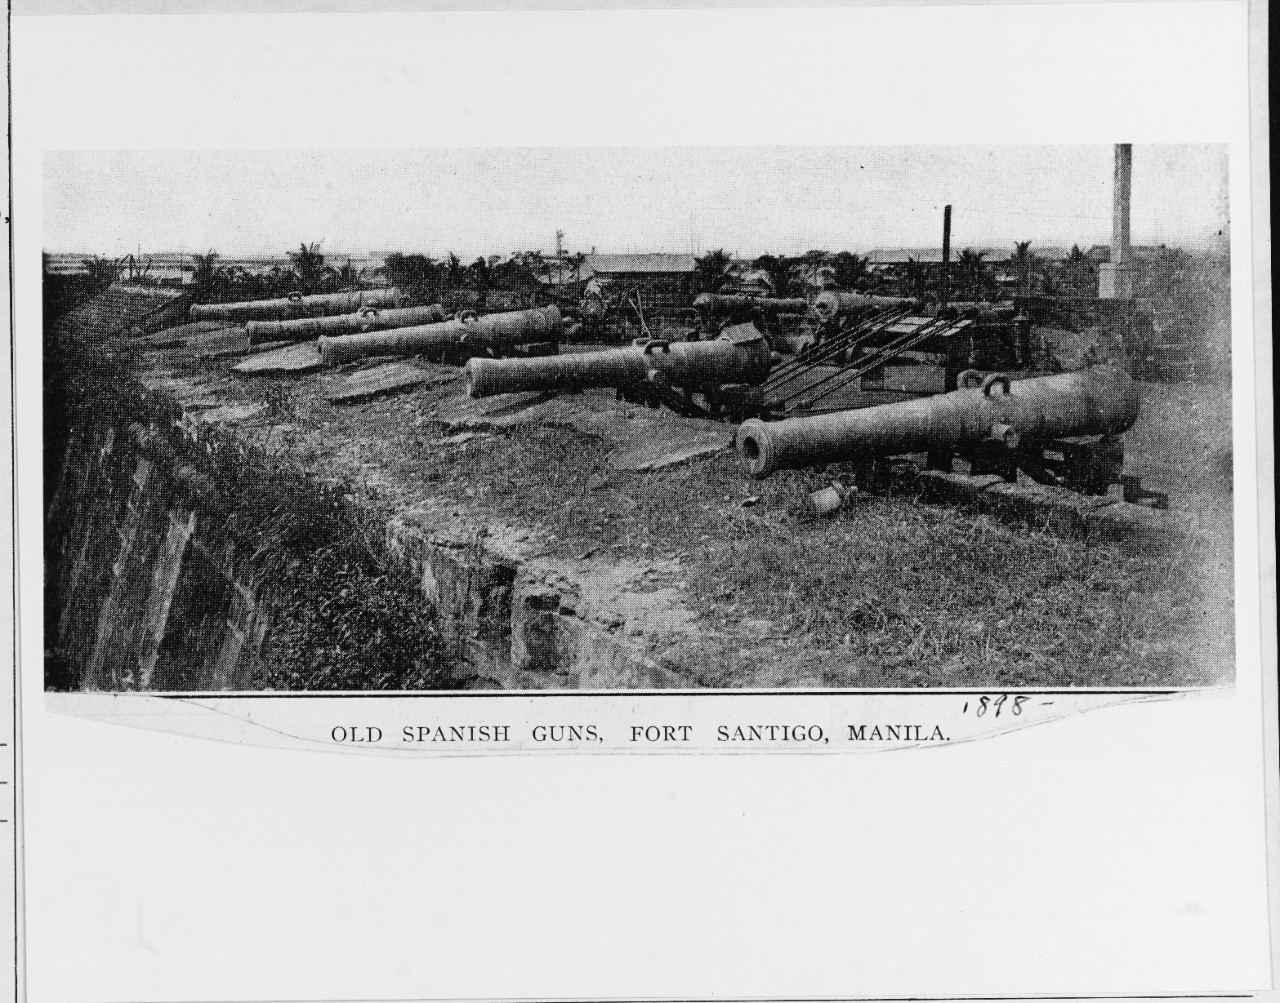 Old Spanish guns at Fort Santiago, Manila, Philippine Islands, 1898.